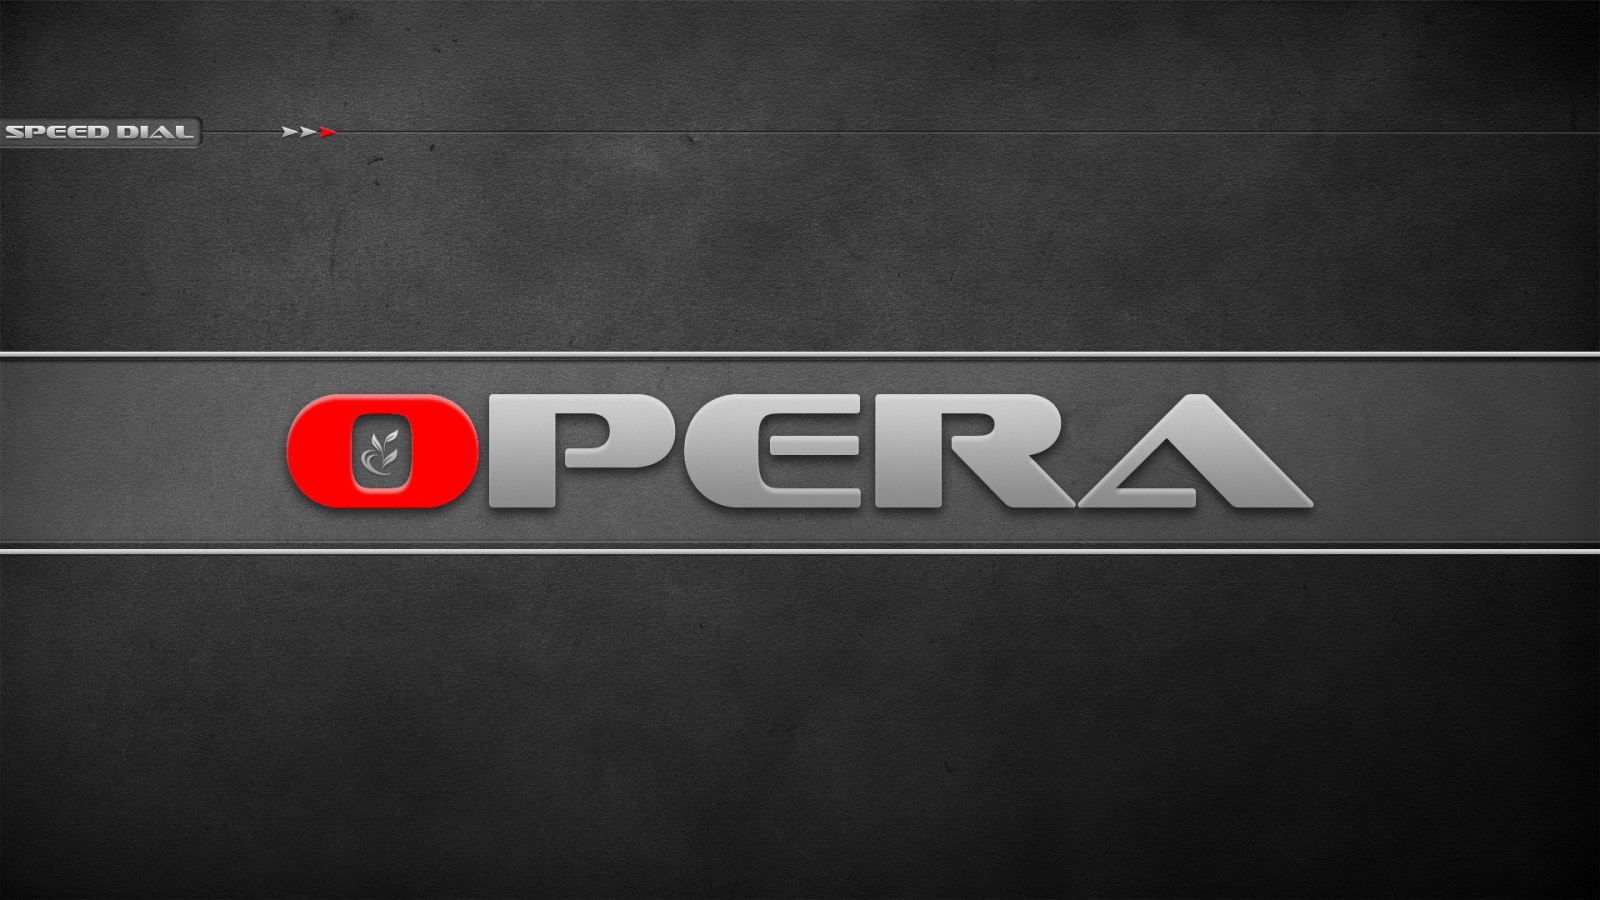 Opera for 1600 x 900 HDTV resolution